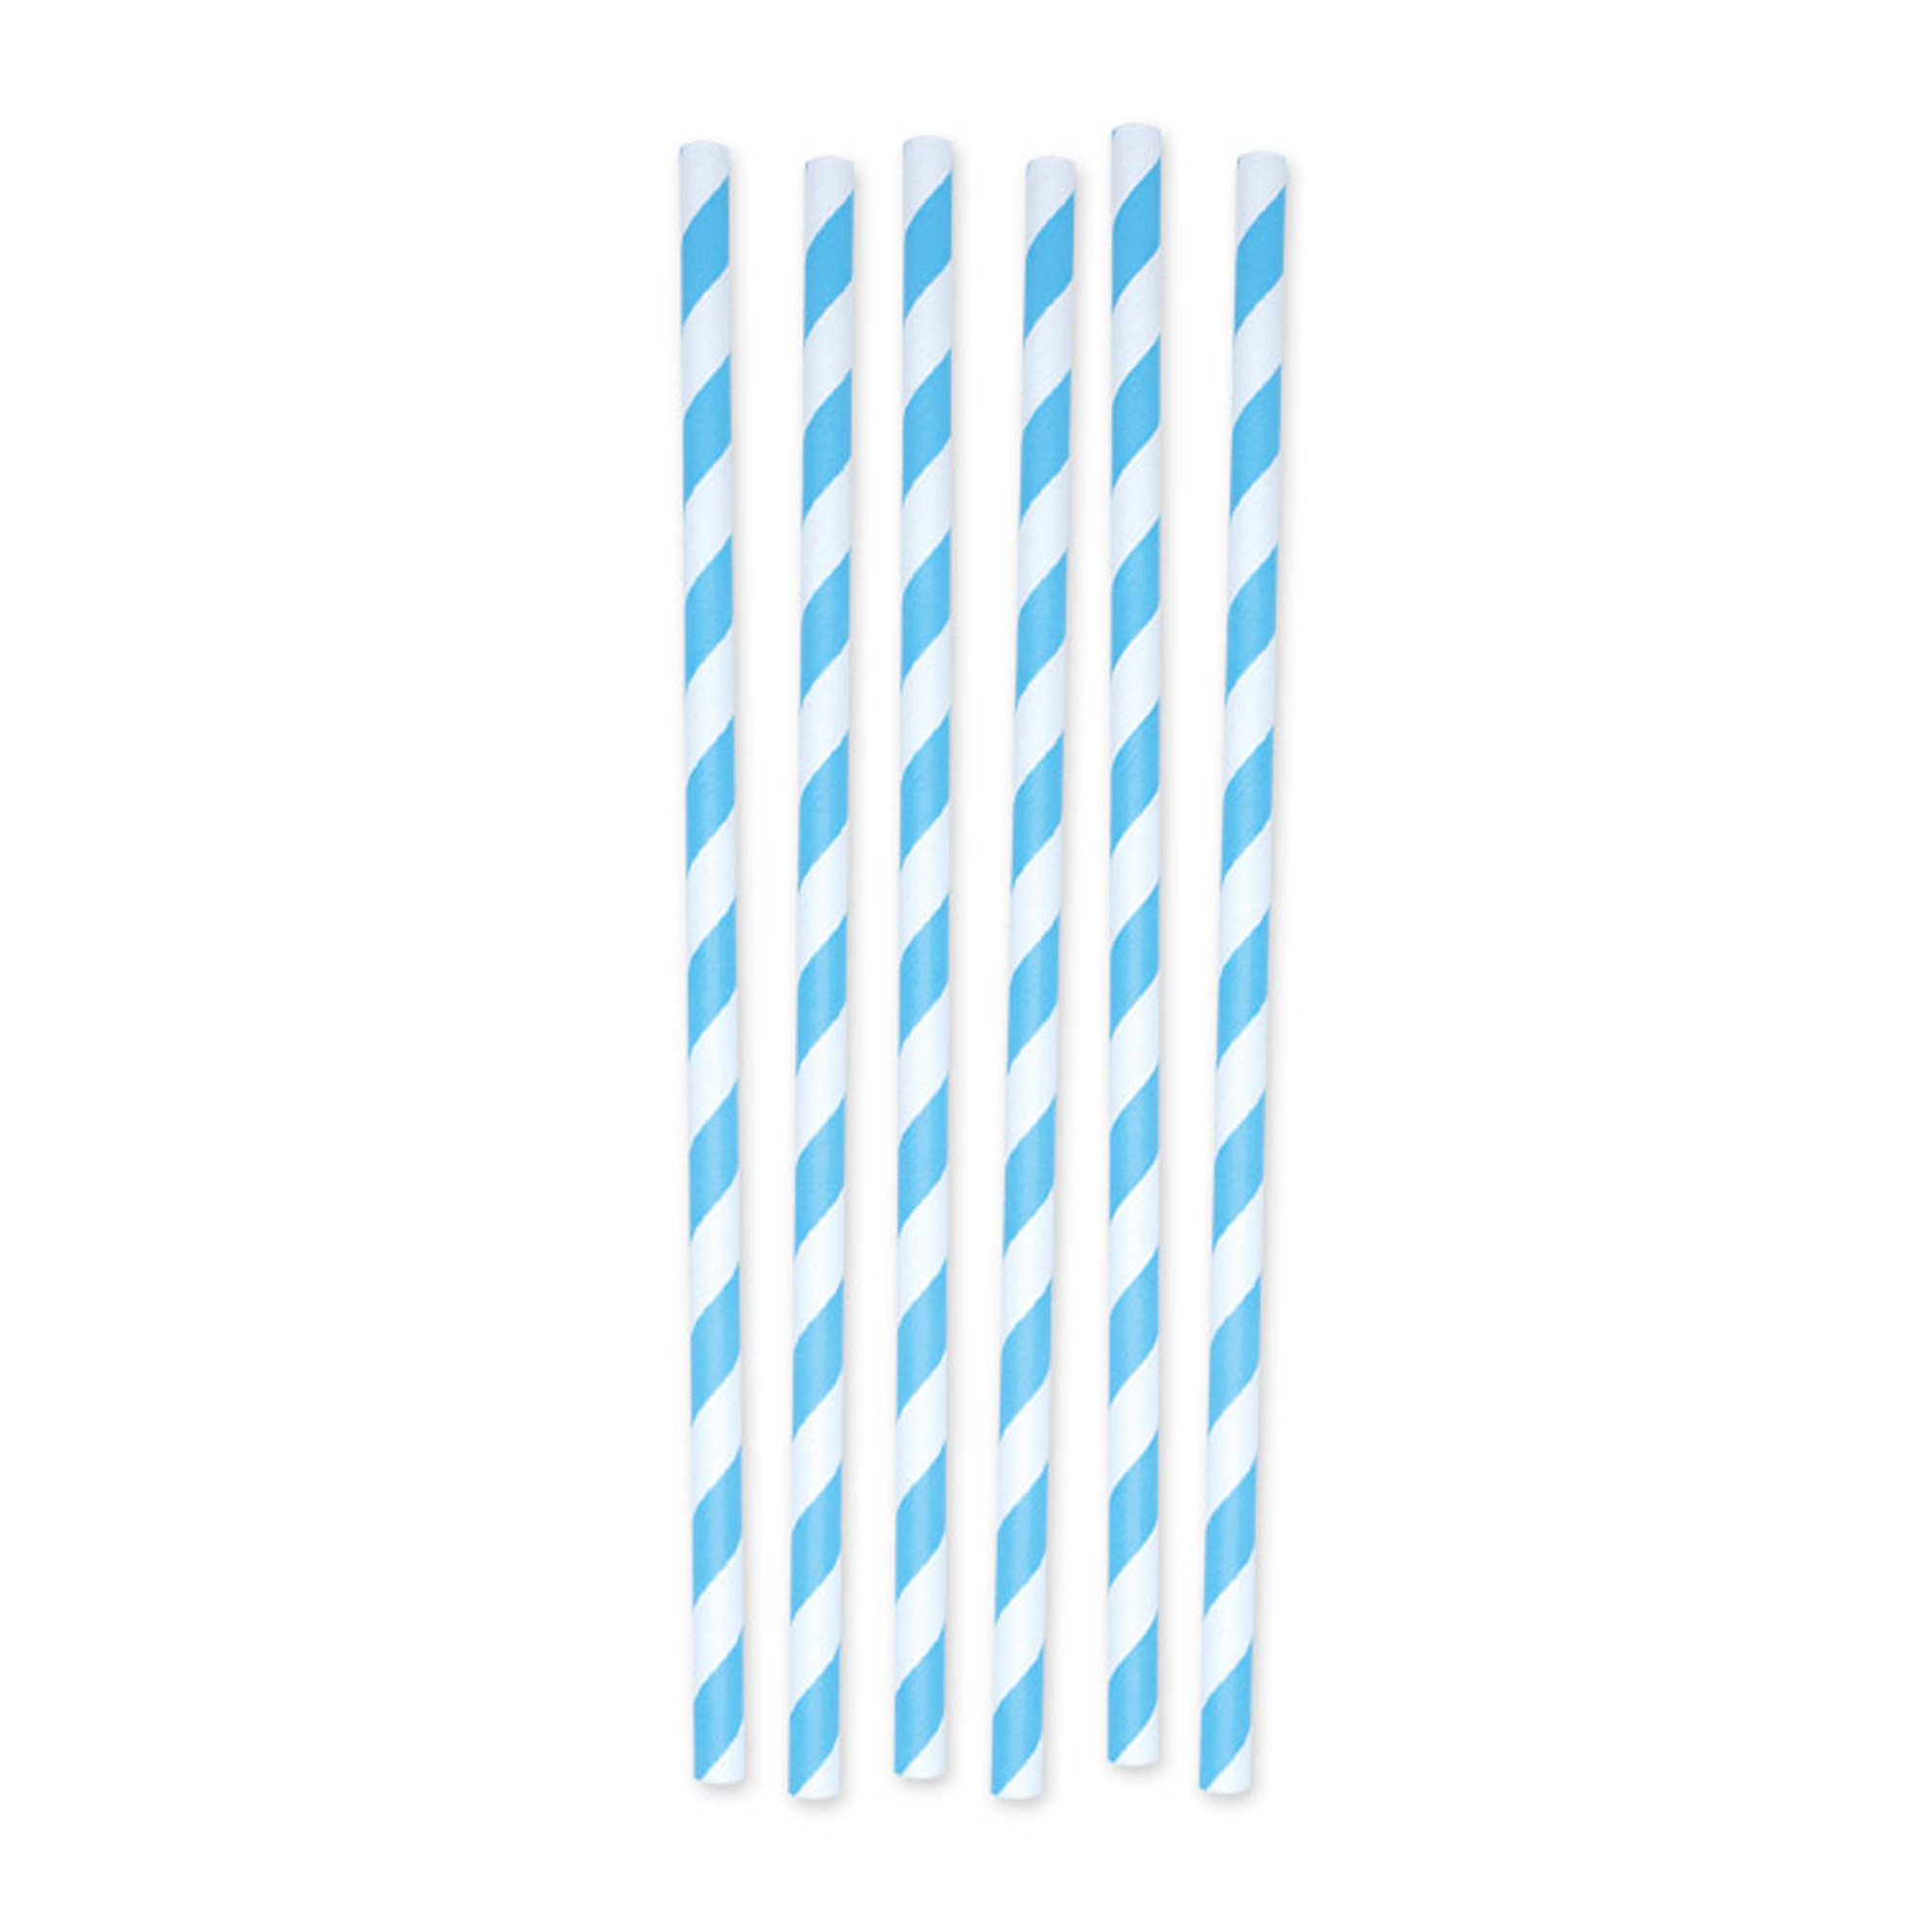 Cannucce Stripes - carta - azzurro/bianco - Big Party - conf. 12 pezzi